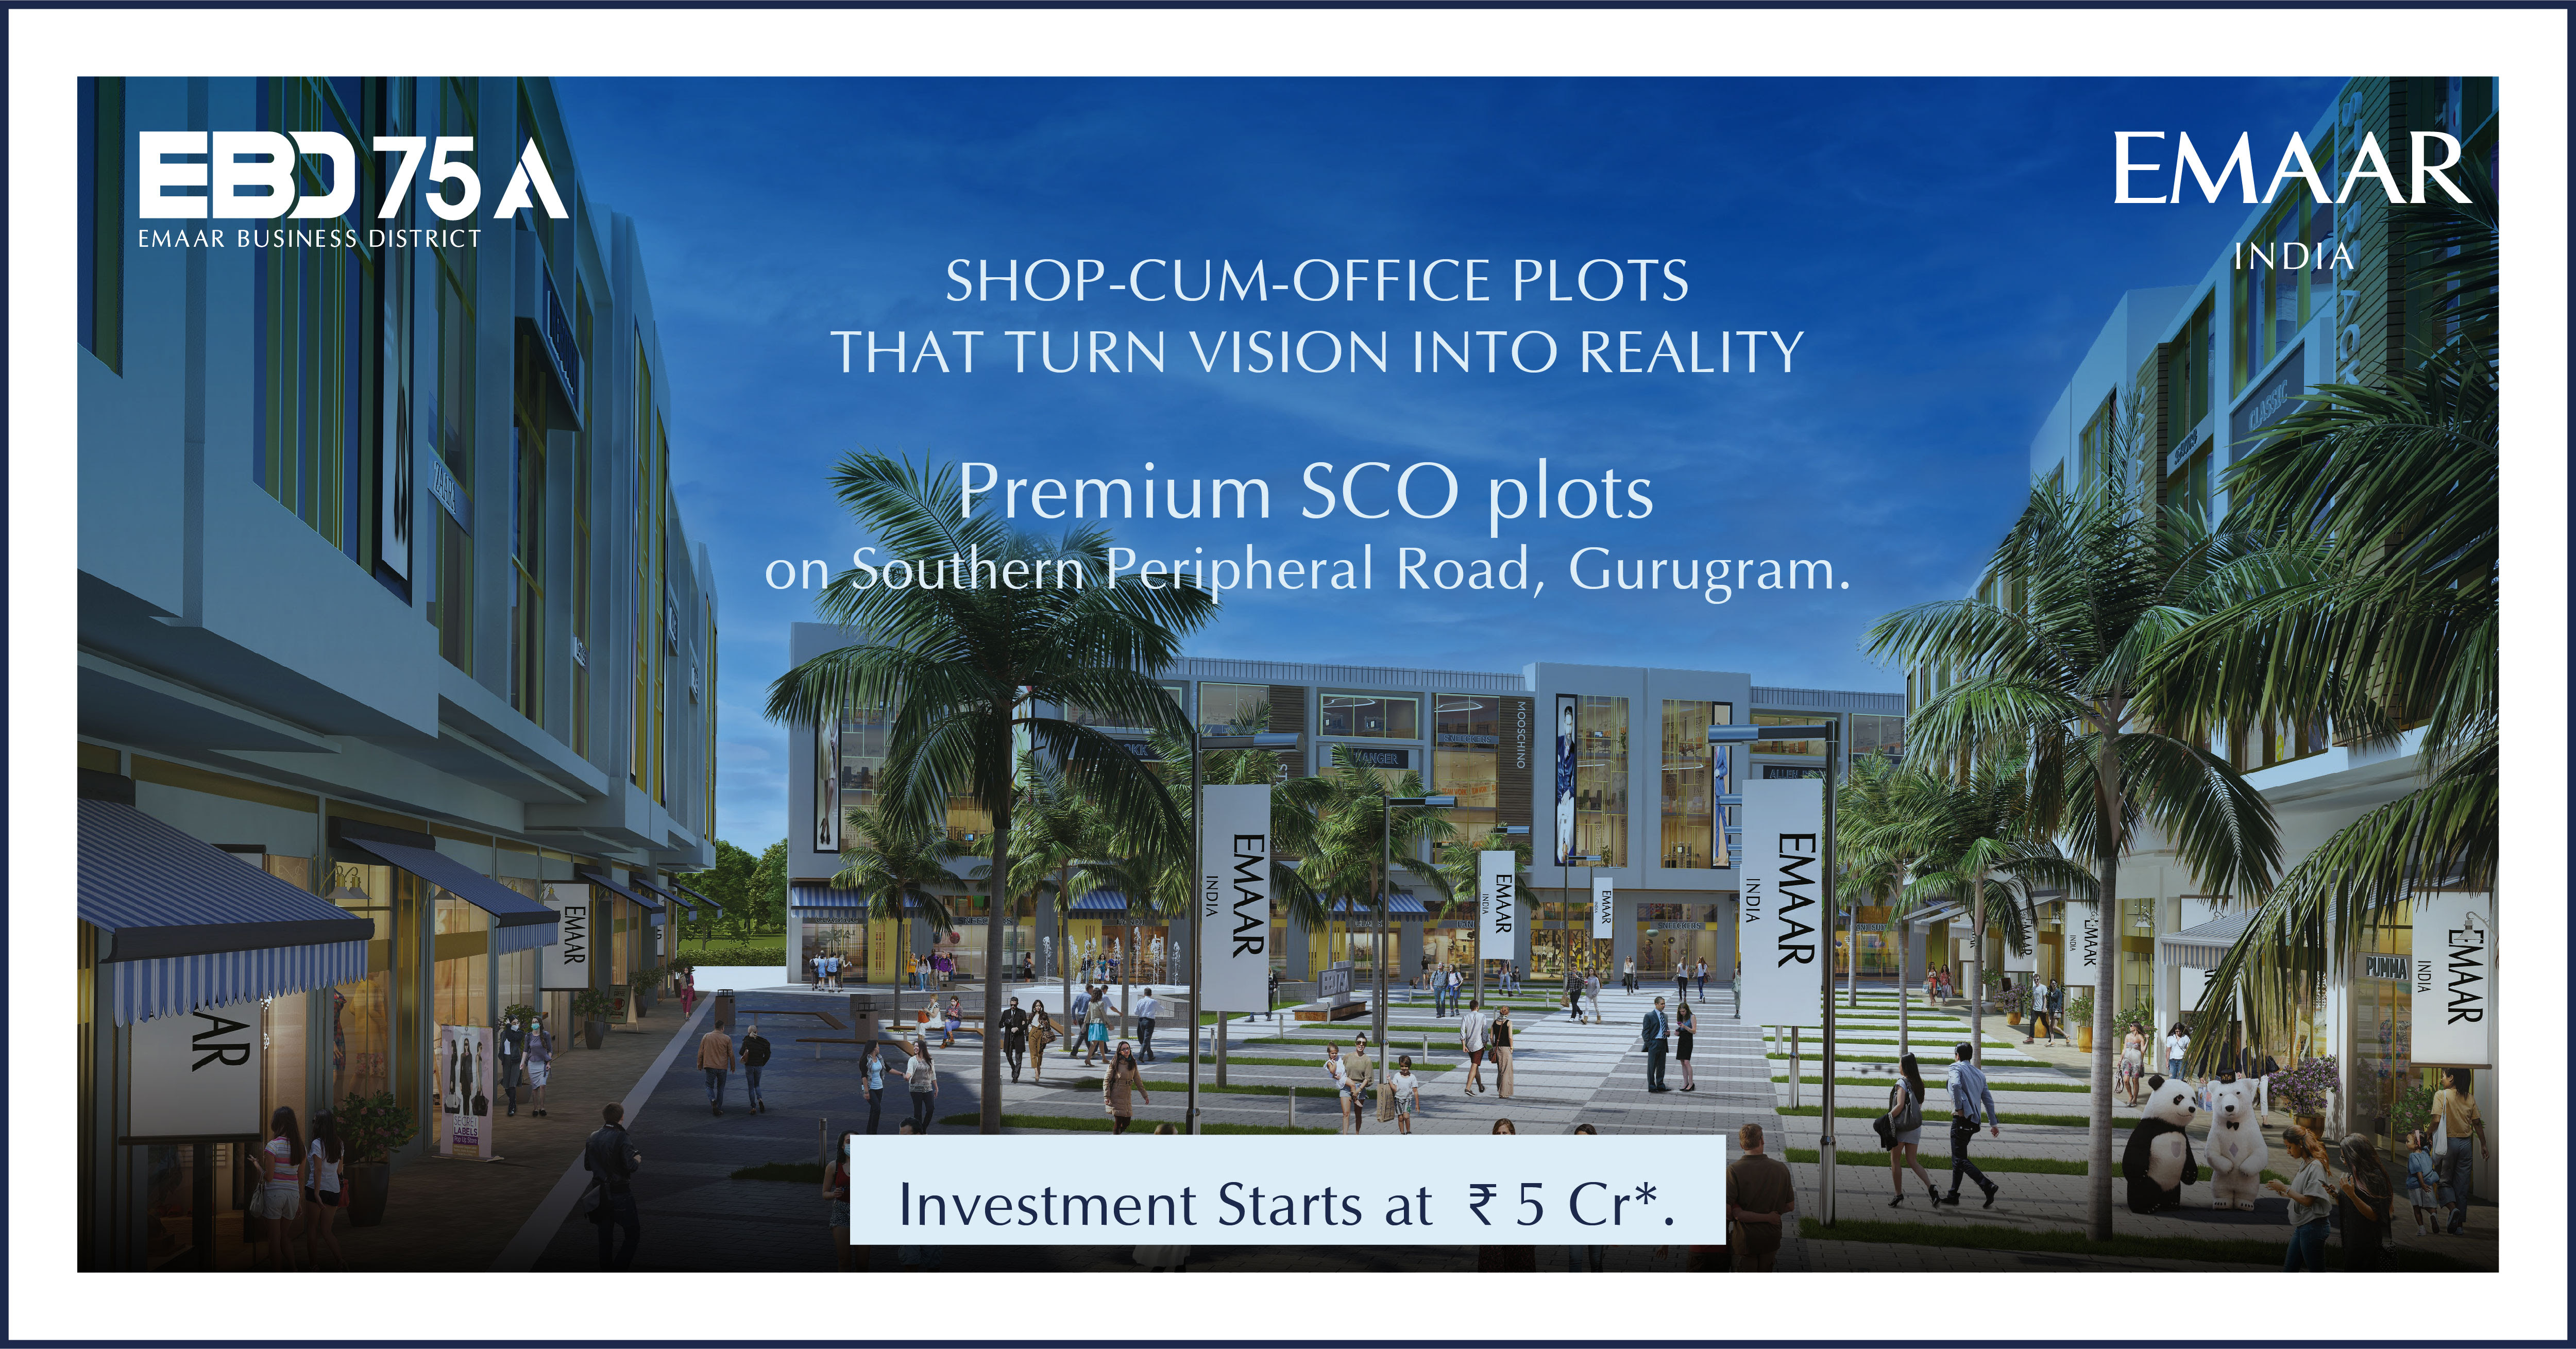 New launched premium SCO plots at Emaar EBD 75A, Gurgaon Update